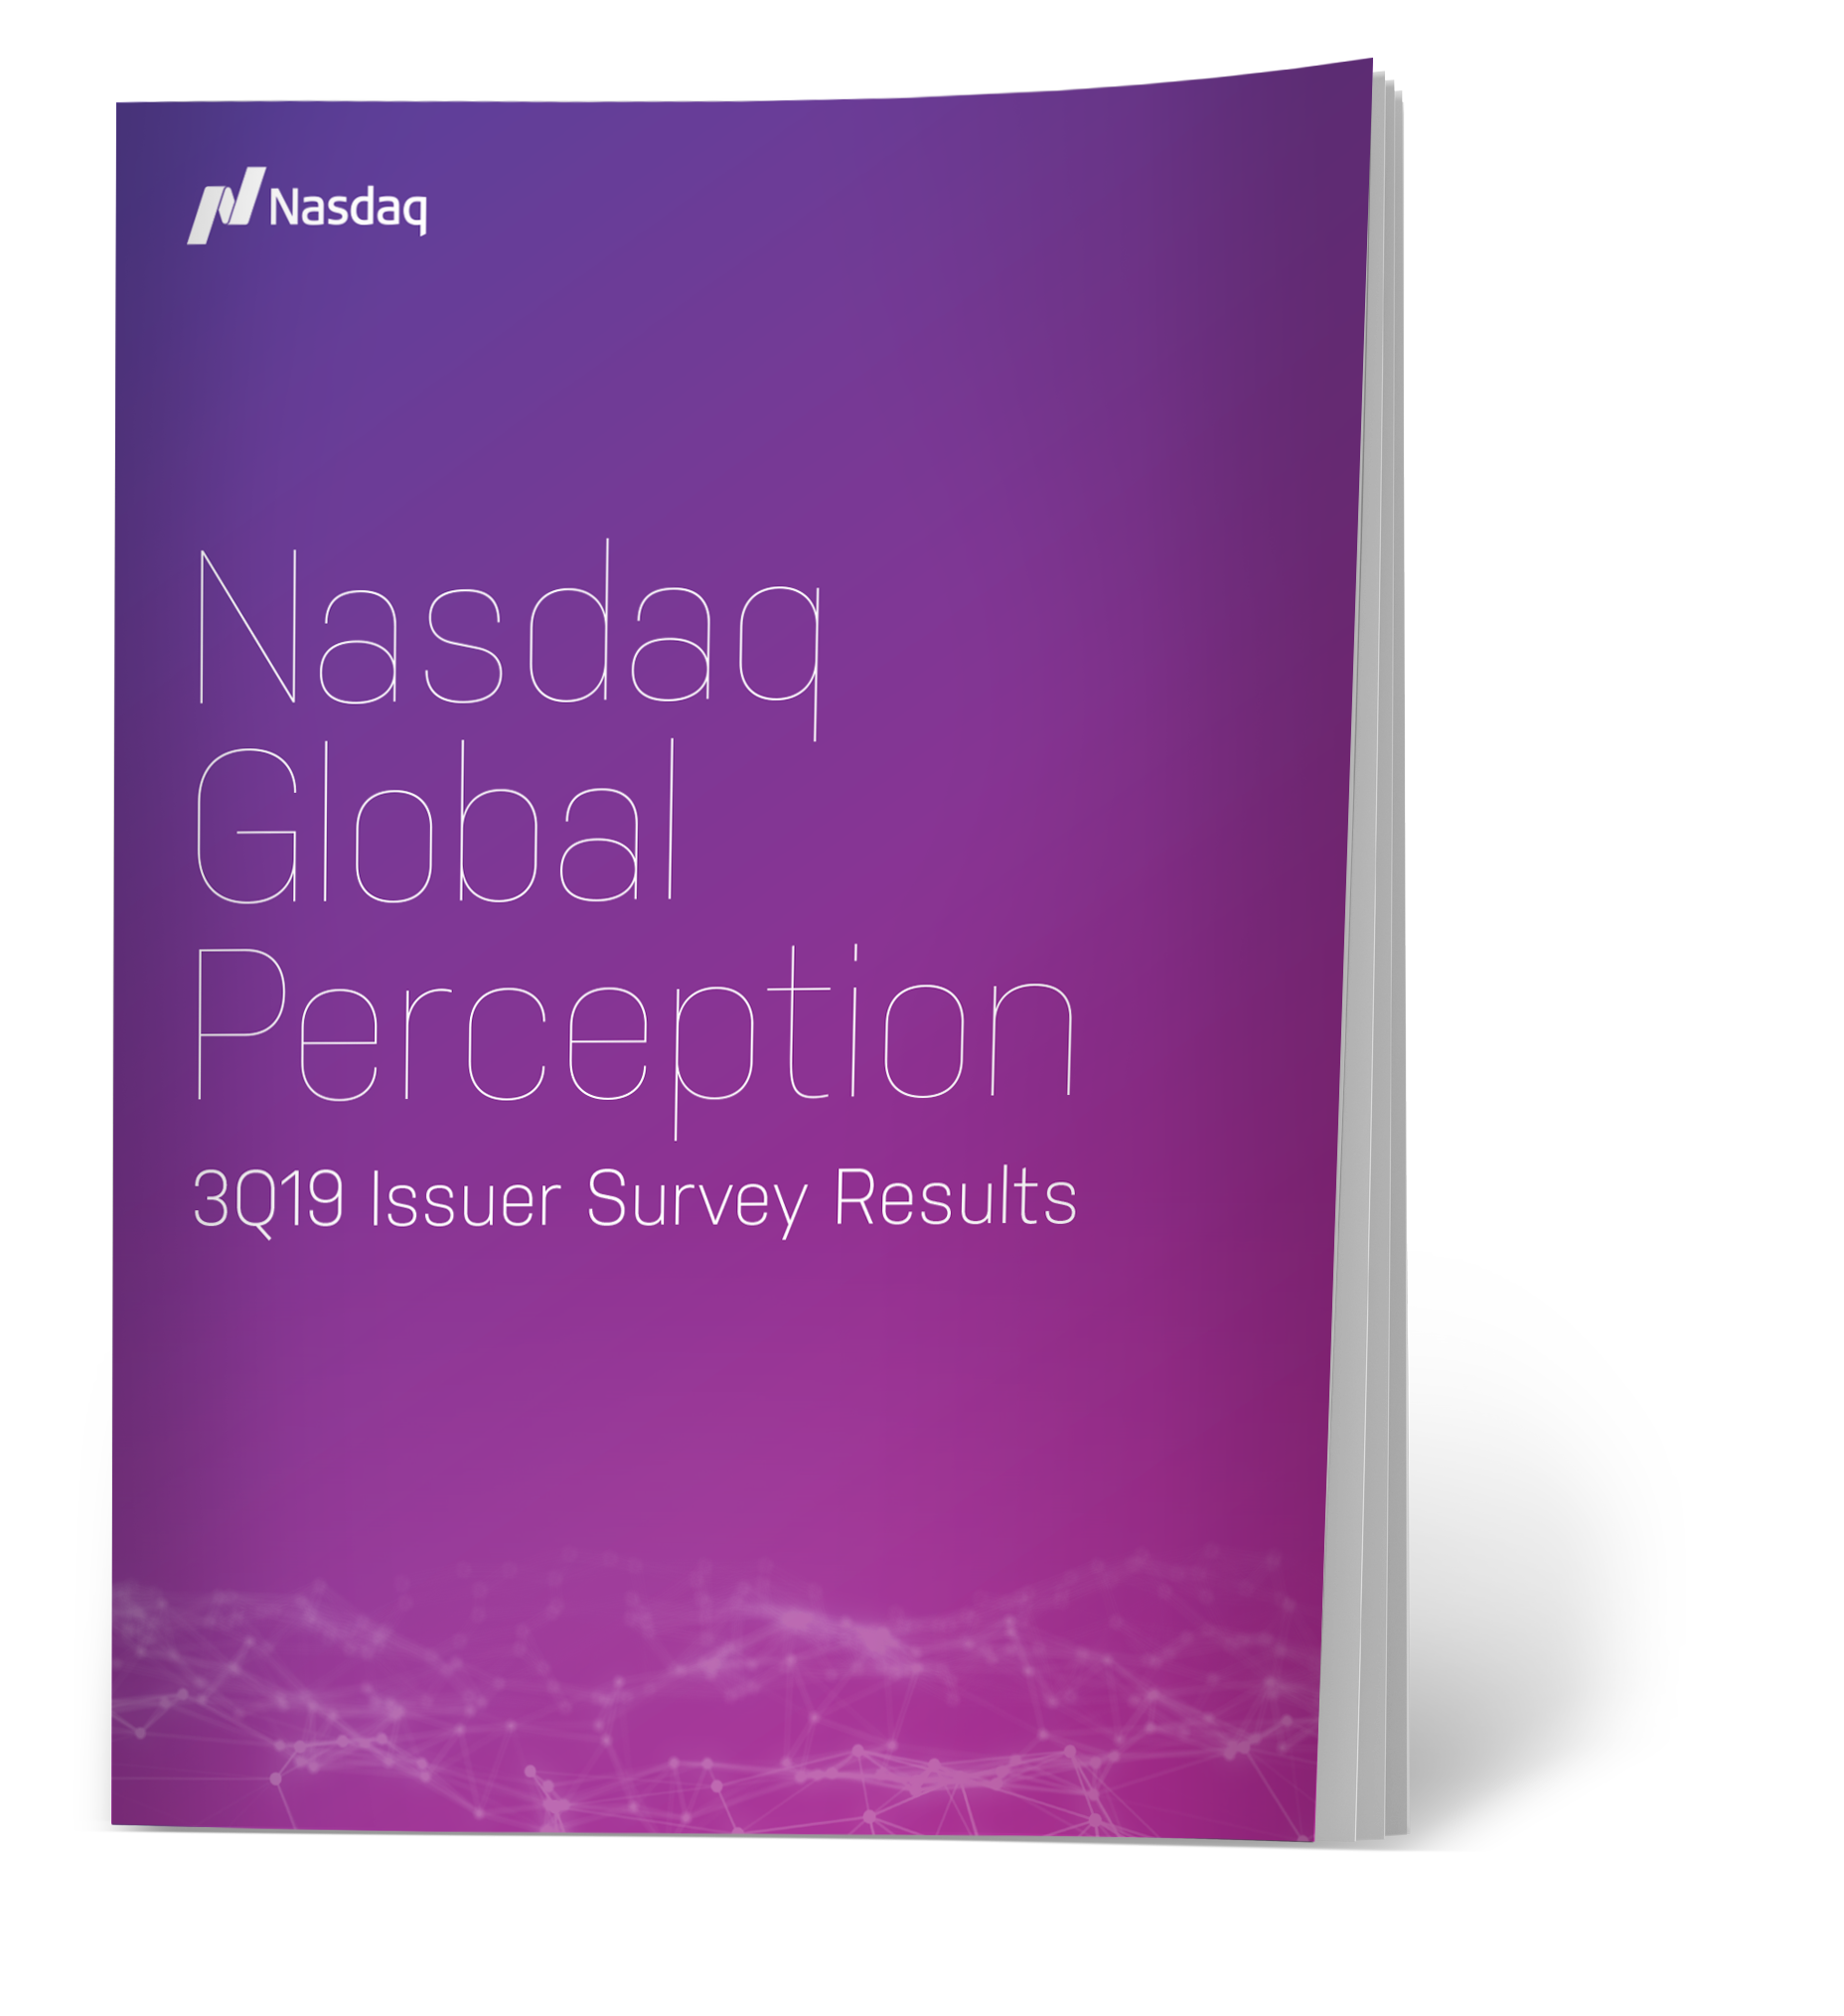 2742 Q19 3d eBook Image Perception Study CS - Nasdaq Global Perception 3Q19 Issuer Survey Results